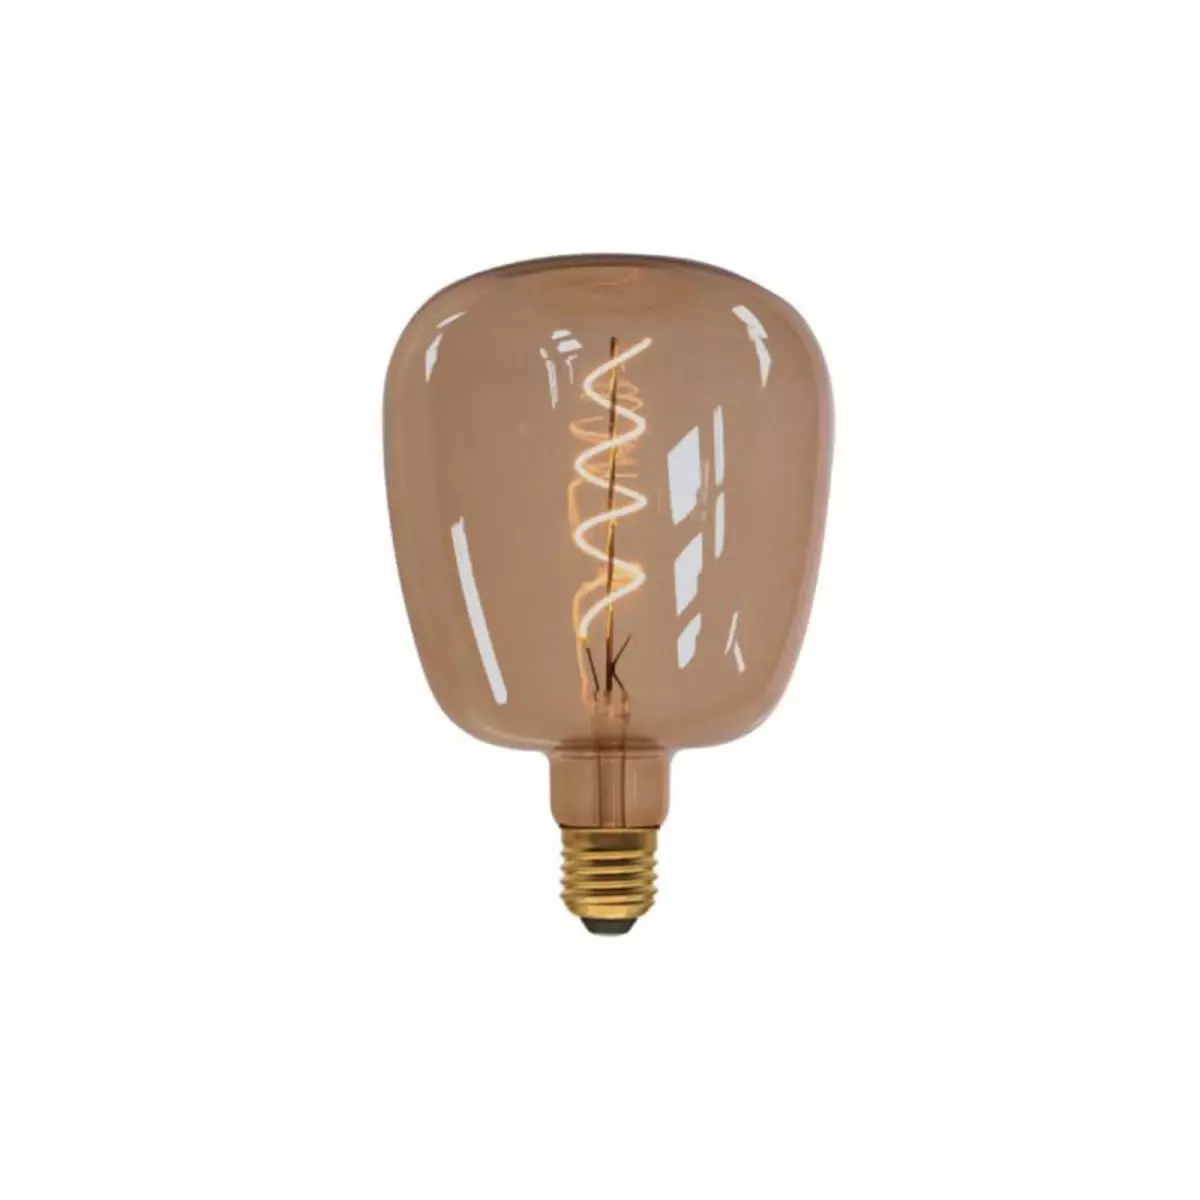  Ampoule LED icecube marron XXCELL - 4 W - 240 lumens - 1800 K - E27